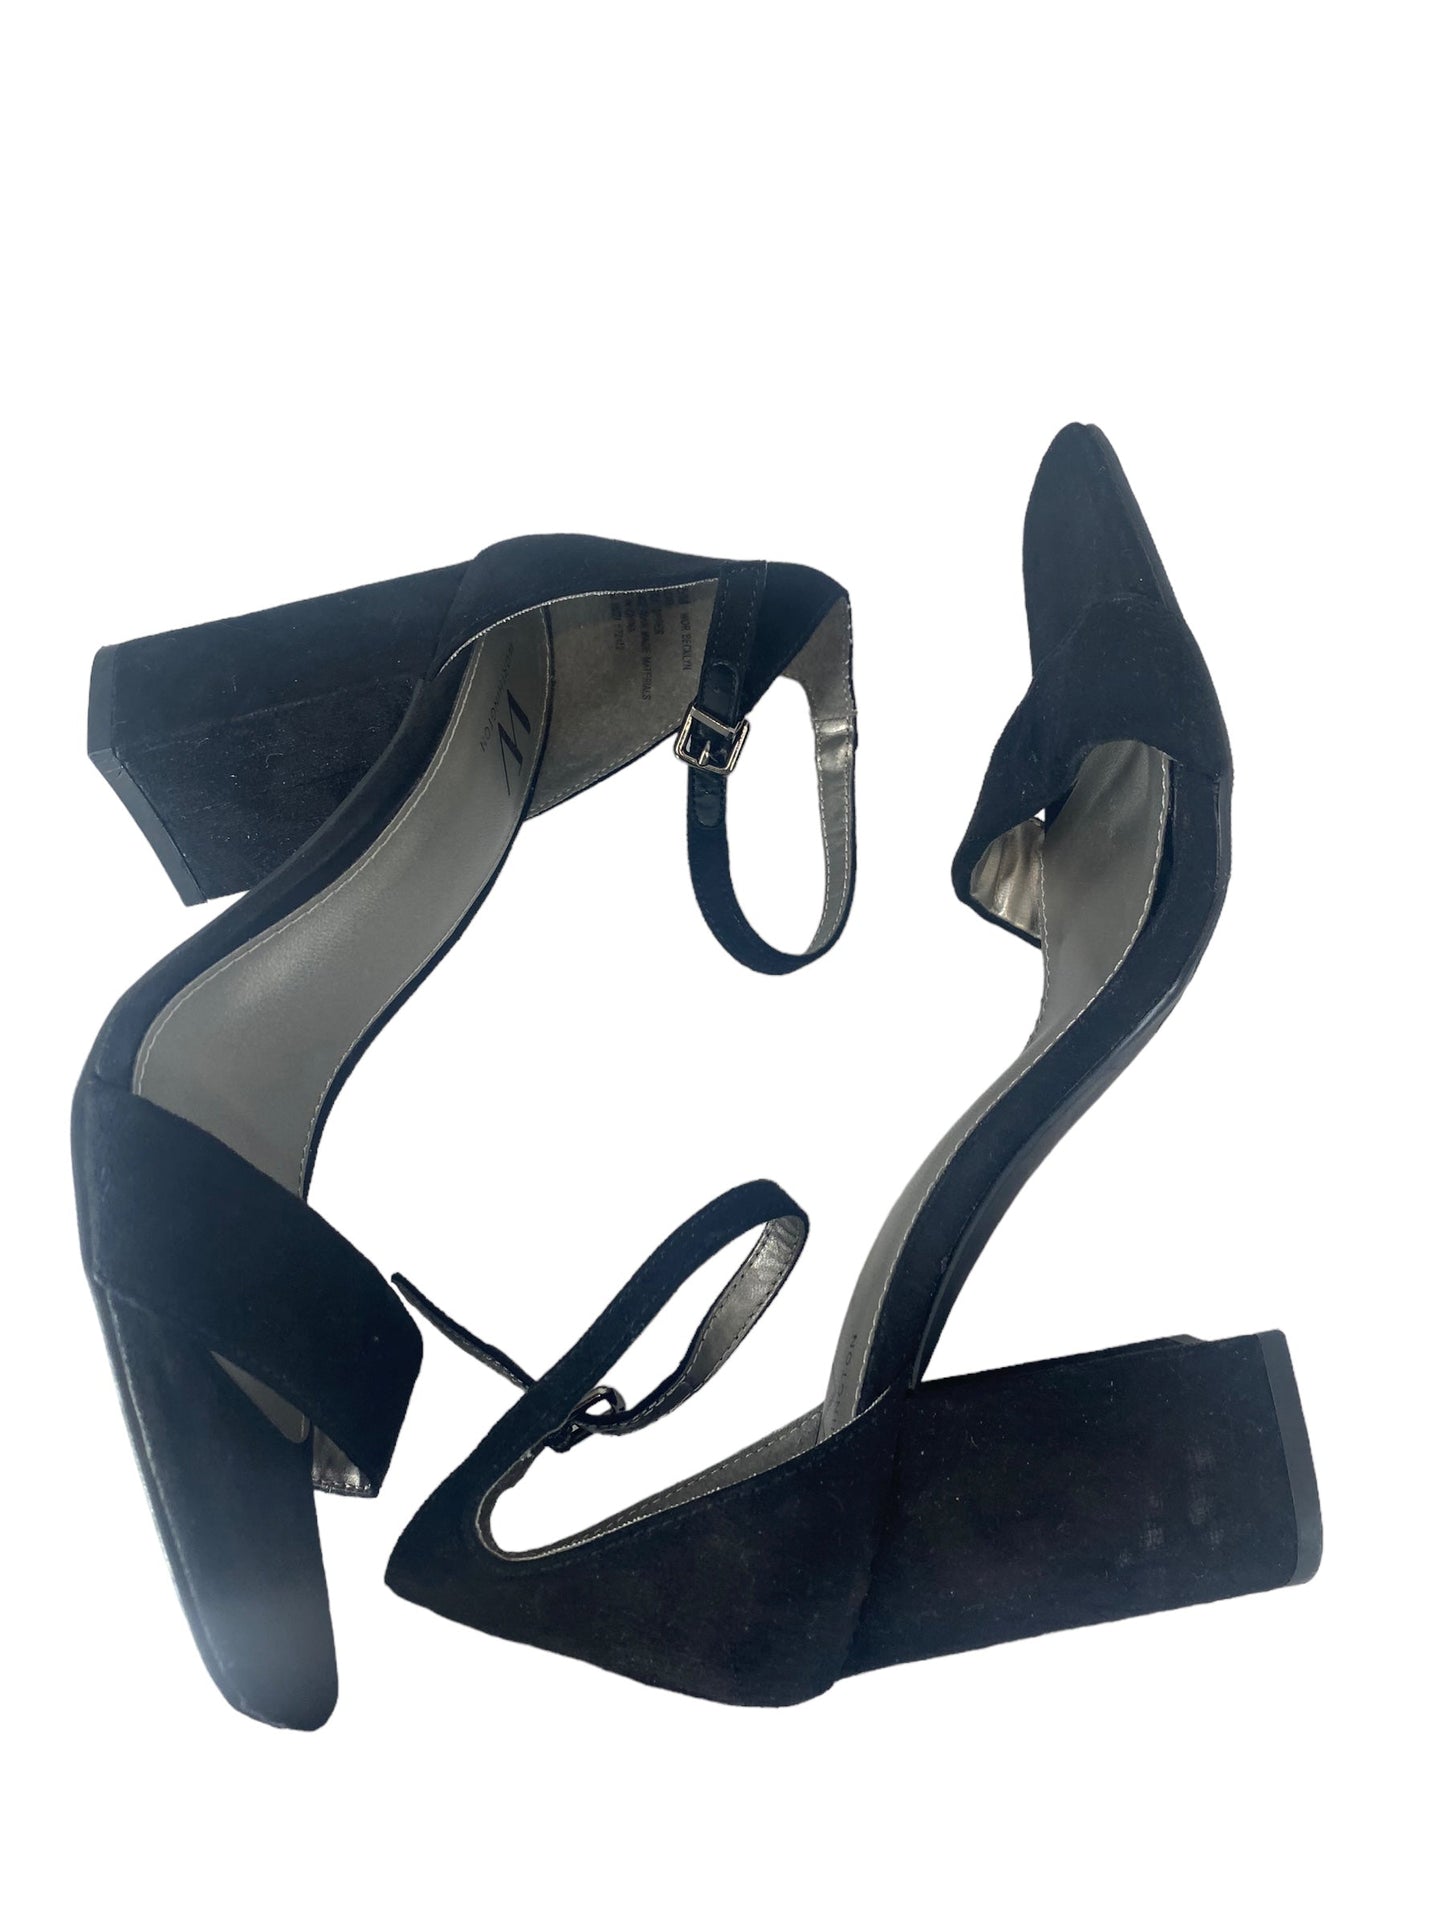 Shoes Heels Block By Worthington  Size: 8.5